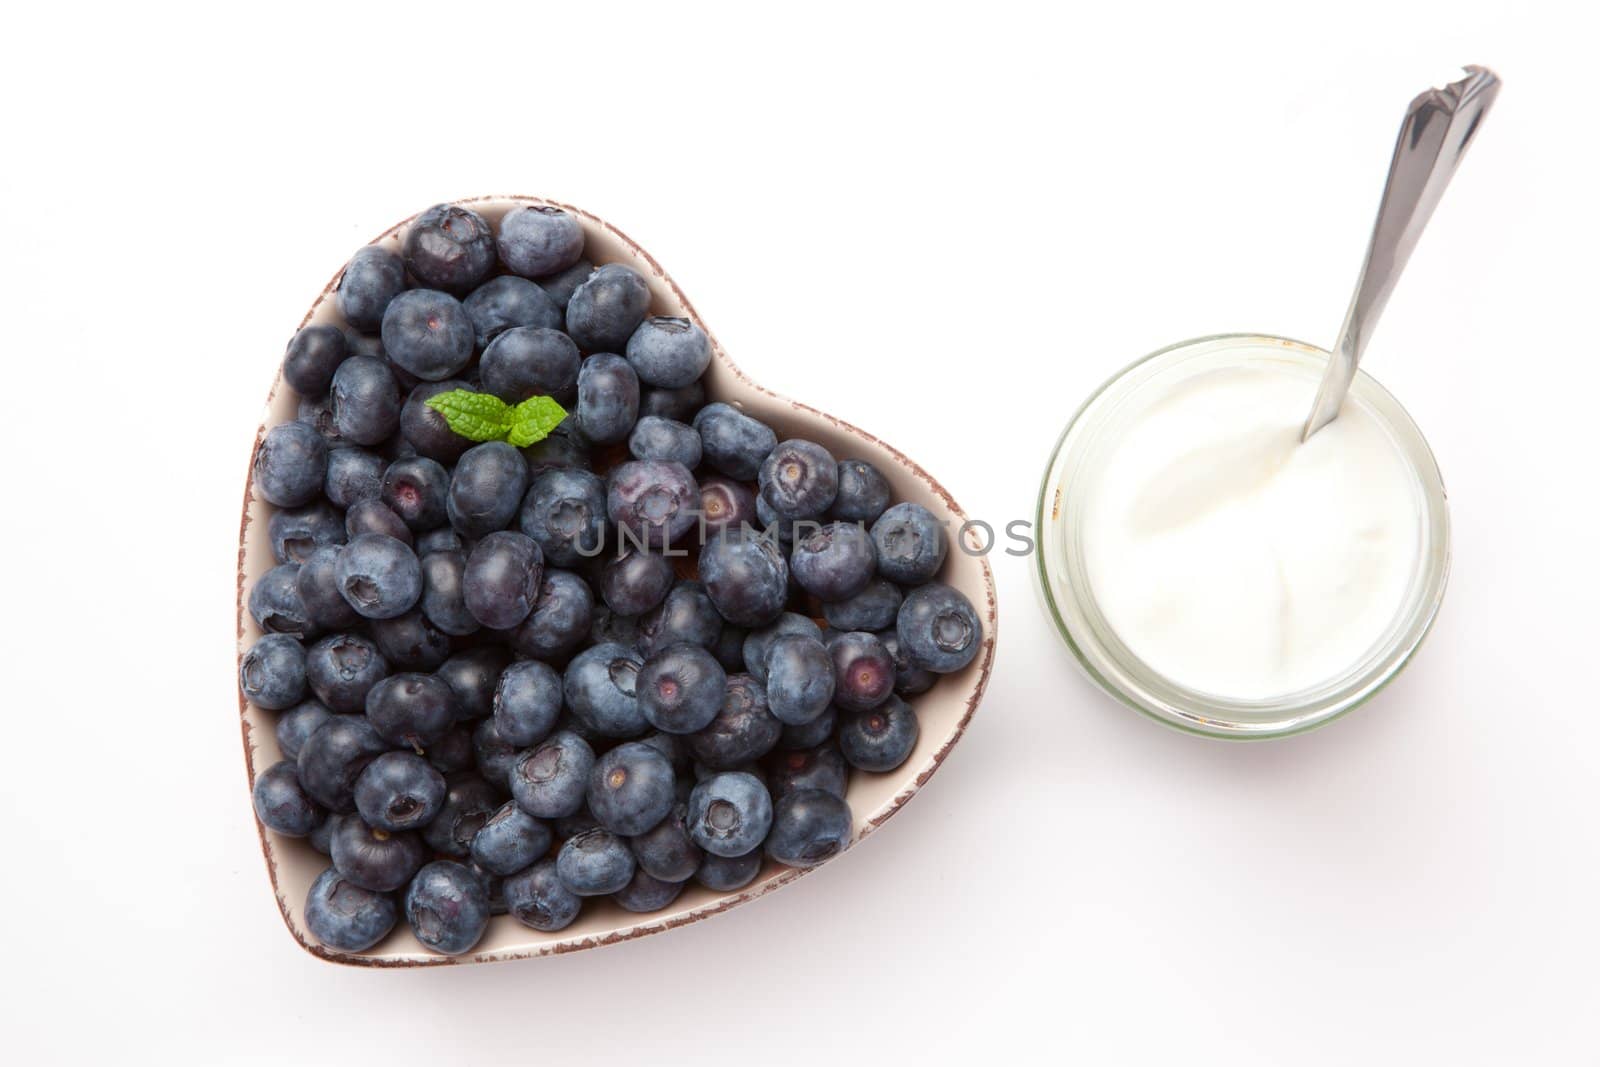 White yogurt and blueberries in a bowl  by Wavebreakmedia